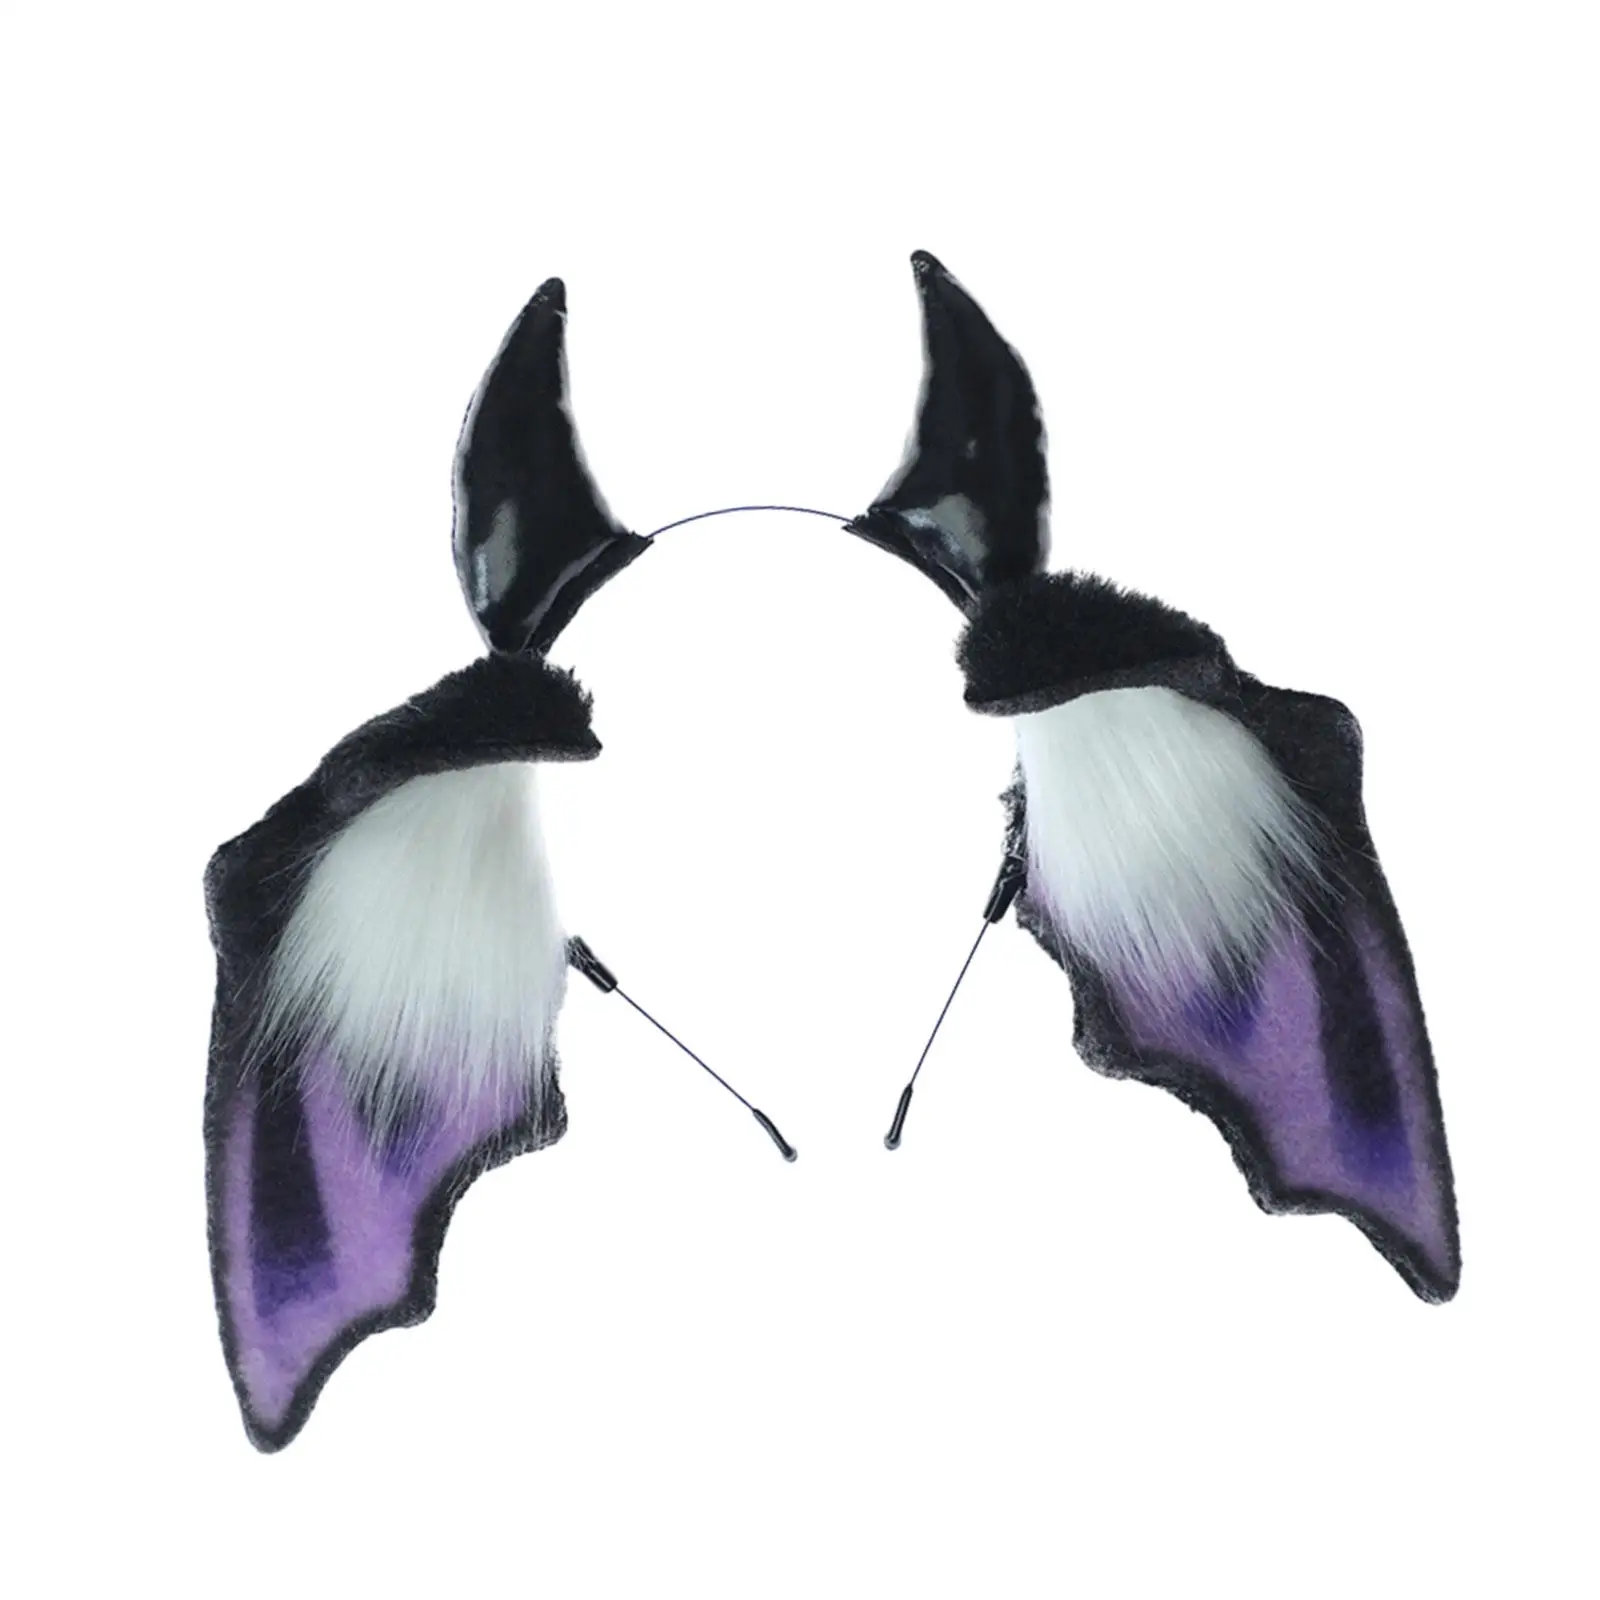 Devil Ears Headband Costume Accessories Headdress Halloween Headband Ears